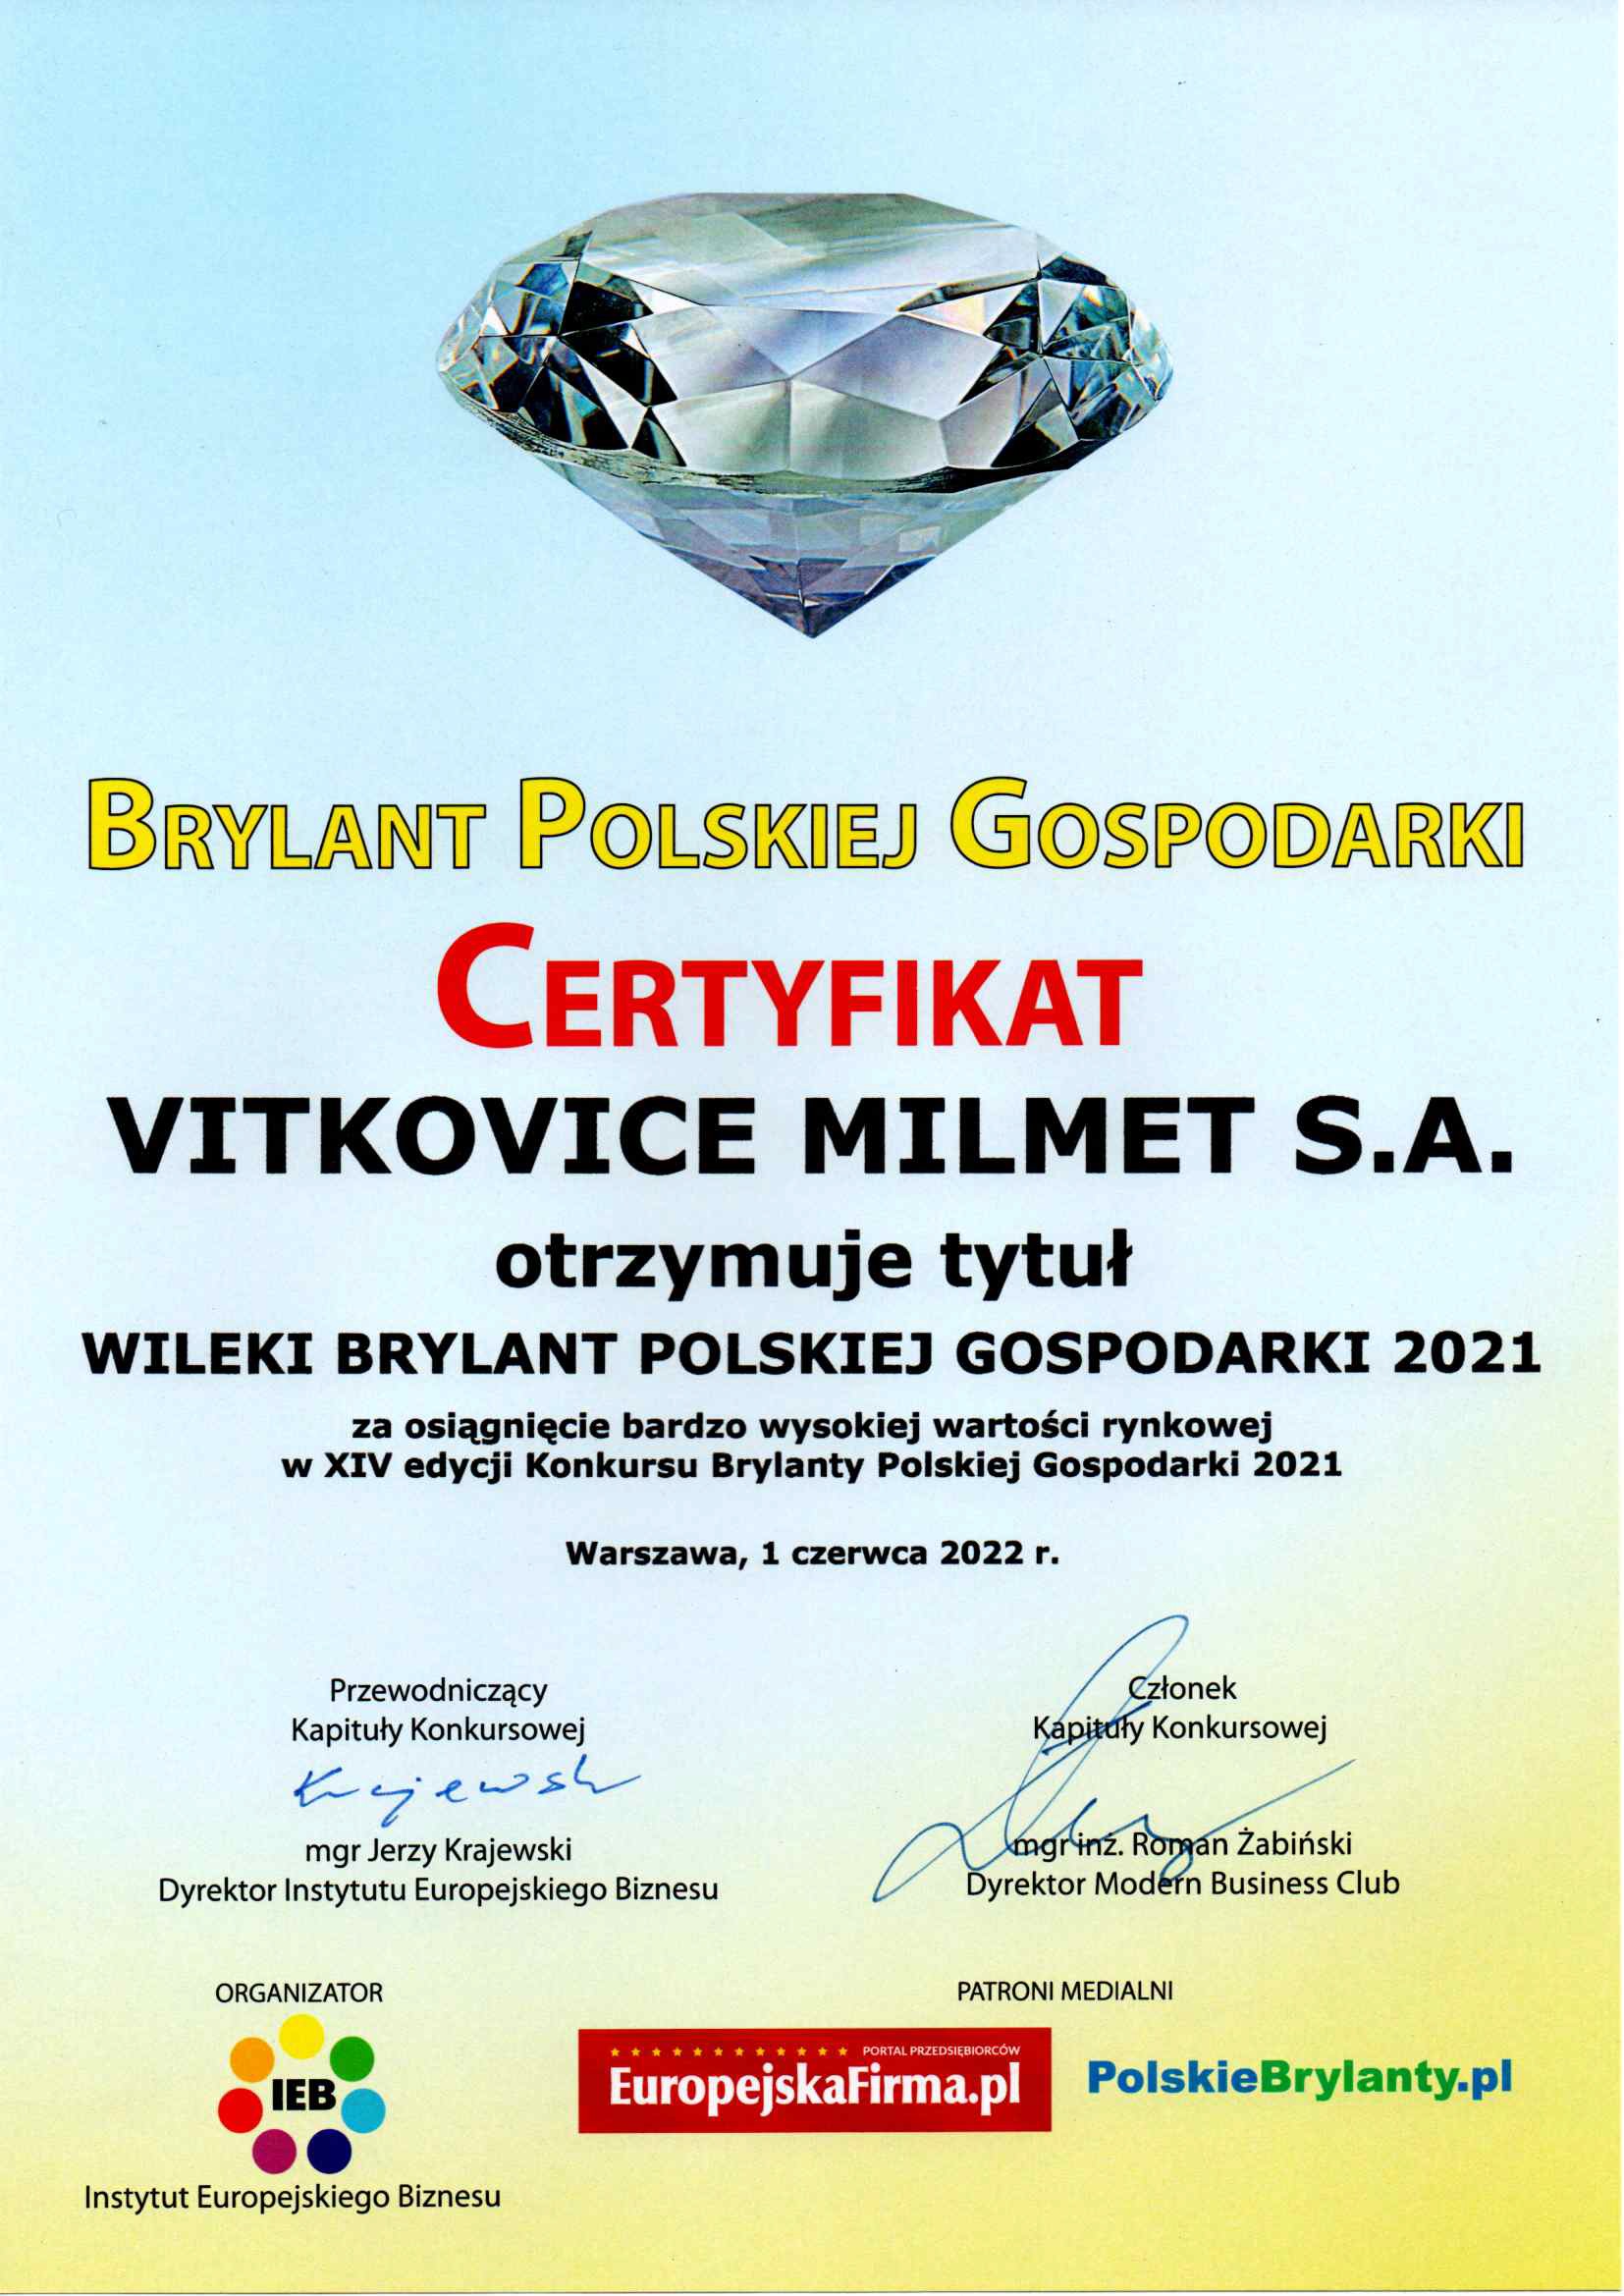 Great Diamond of the Polish Economy for VITKOVICE MILMET S.A.